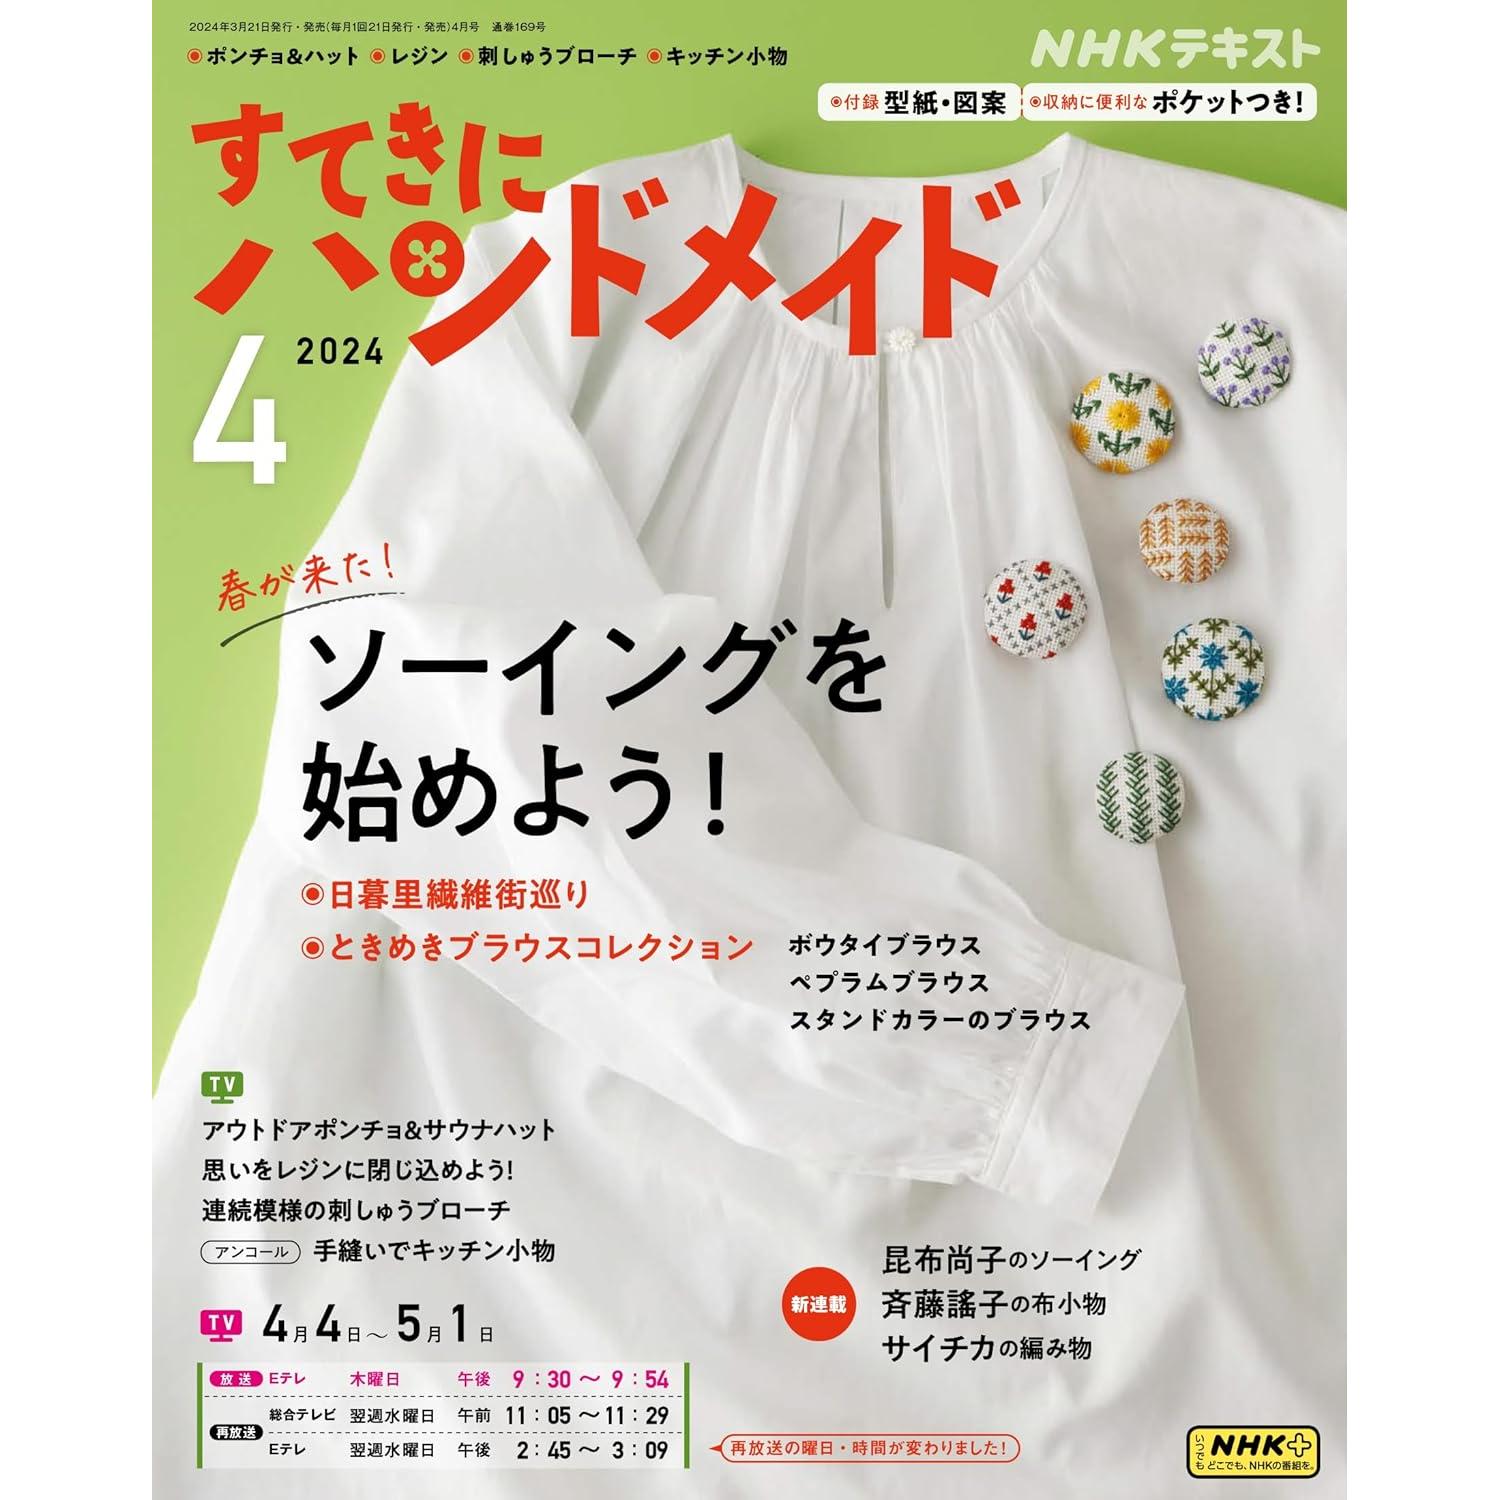 NHK67044 Sutekini Handmade 2024/April issue(book)